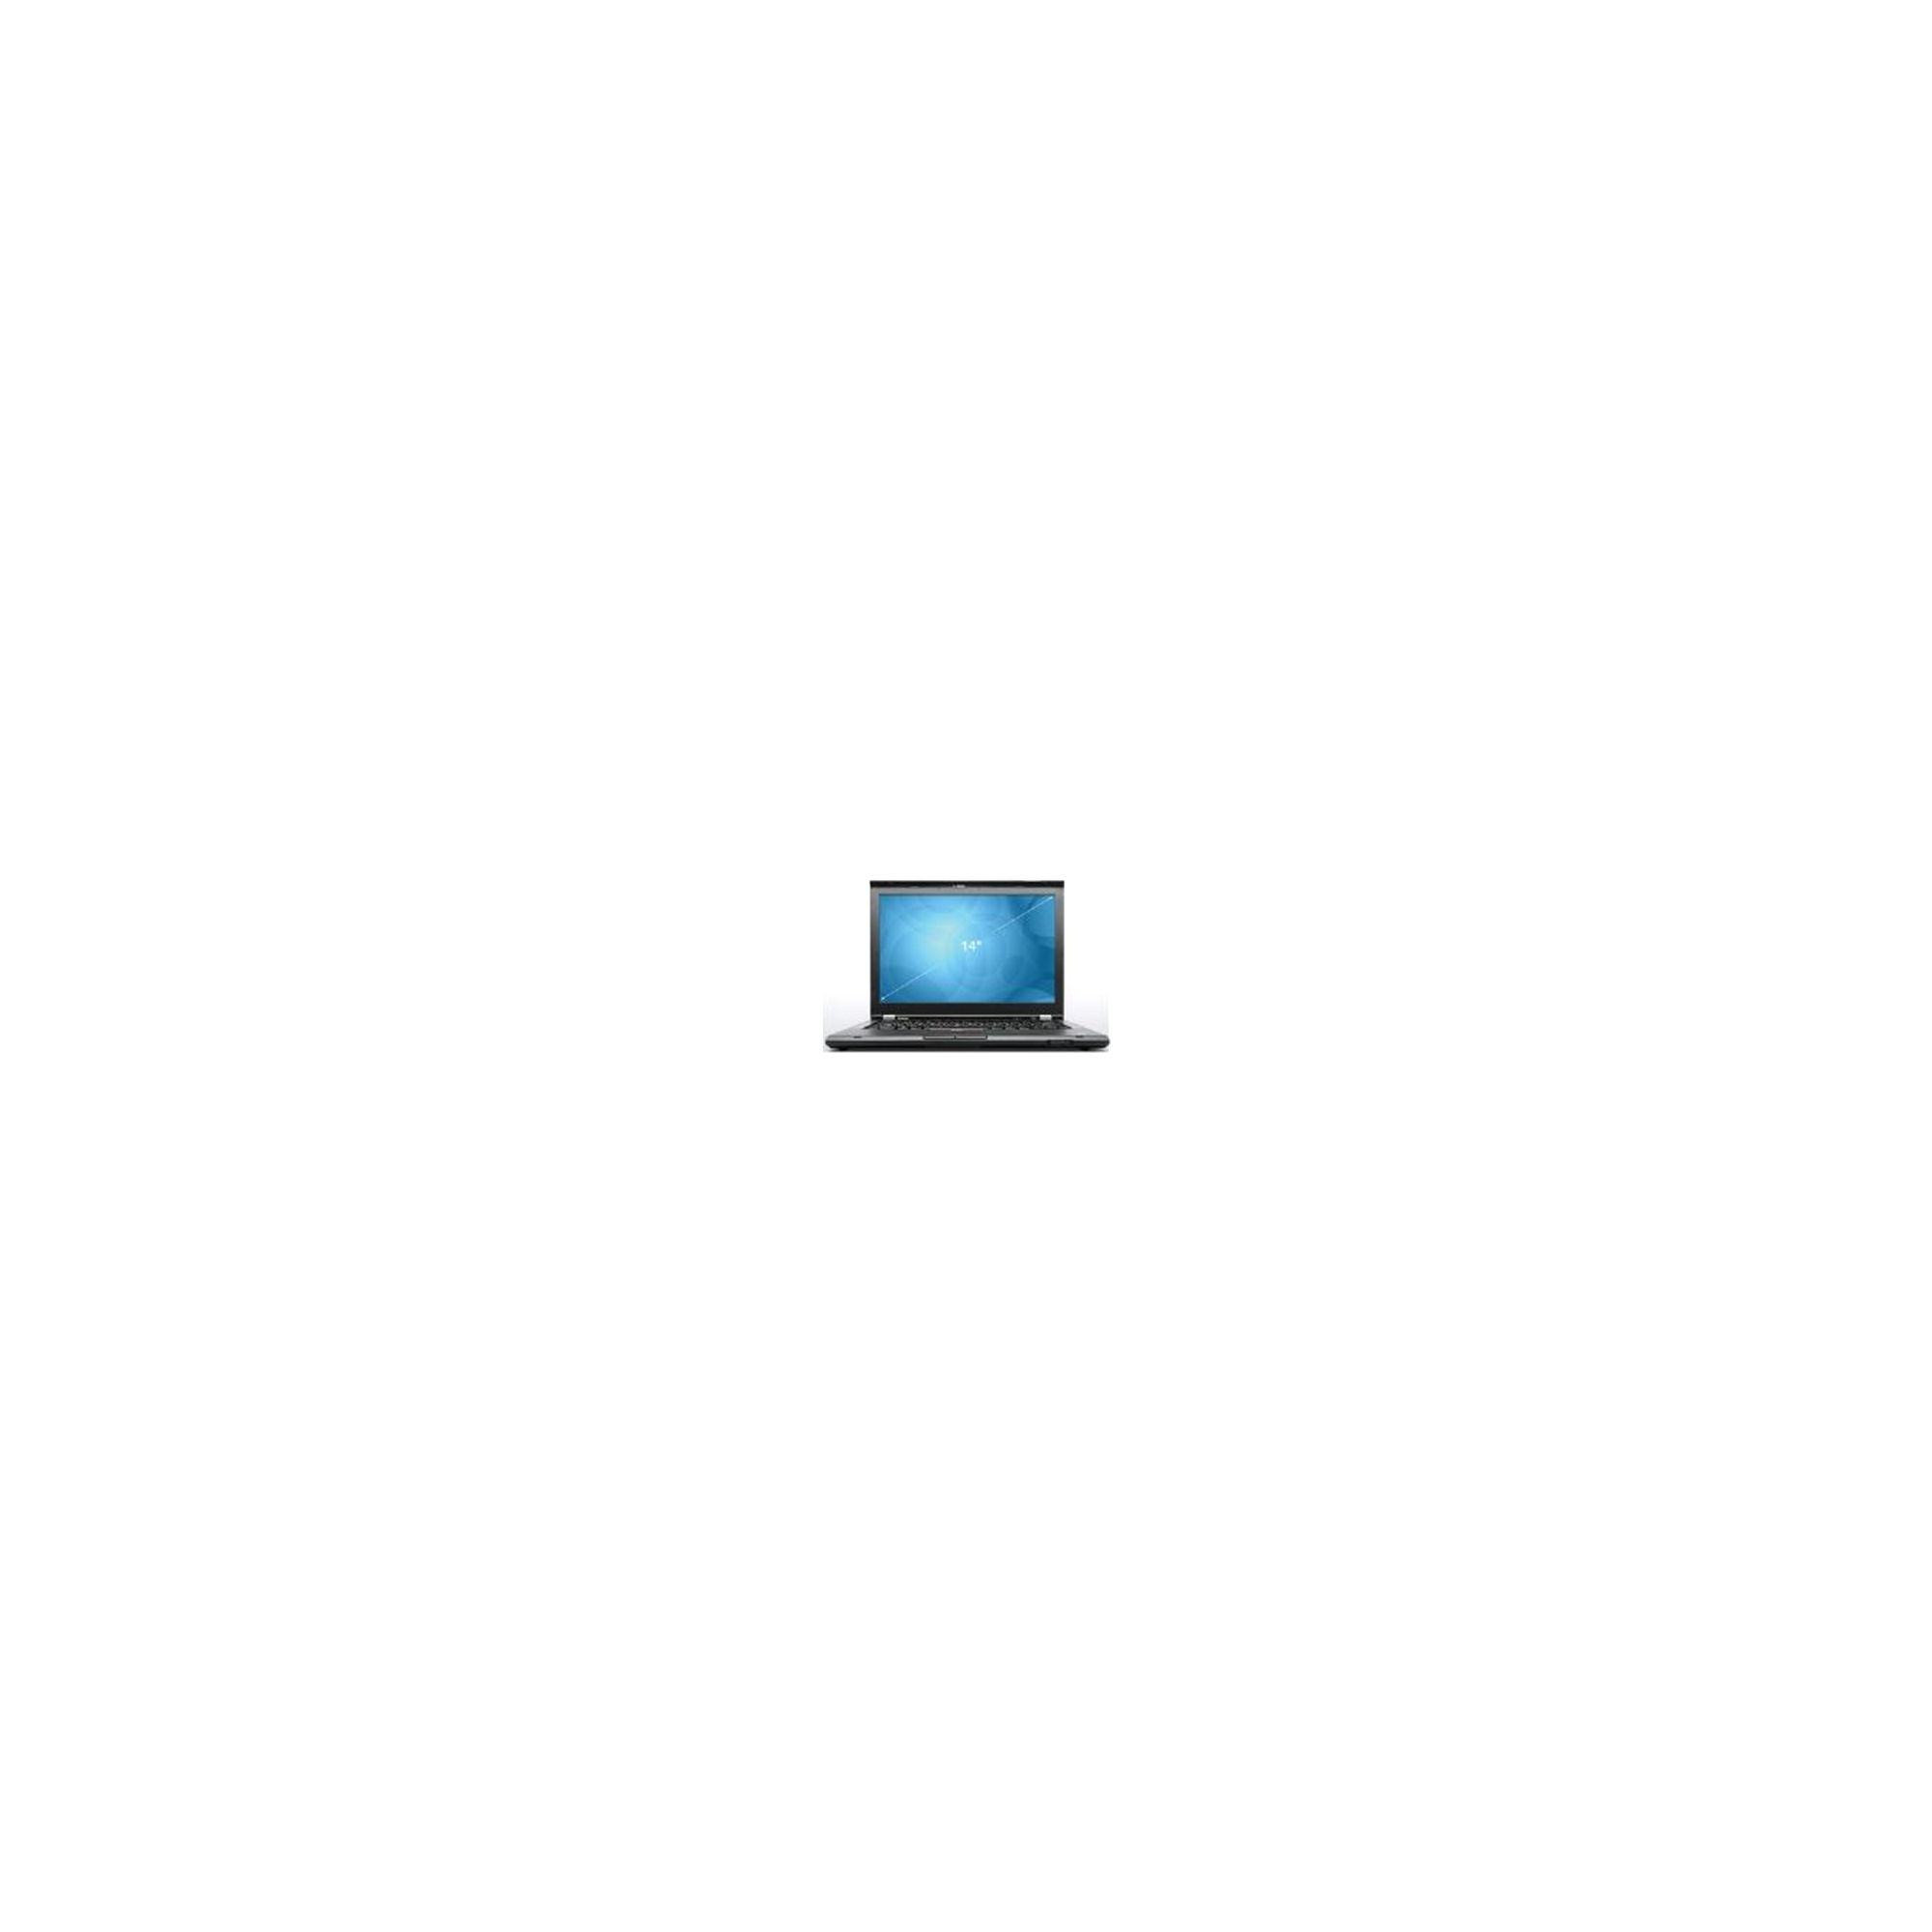 Lenovo ThinkPad T430 2349KAG (14.0 inch) Notebook Core i7 (3520M) 2.9GHz 4GB 500GB DVD±RW WLAN BT Webcam Windows 7 Pro 64-bit/Windows 8 Pro 64-bit